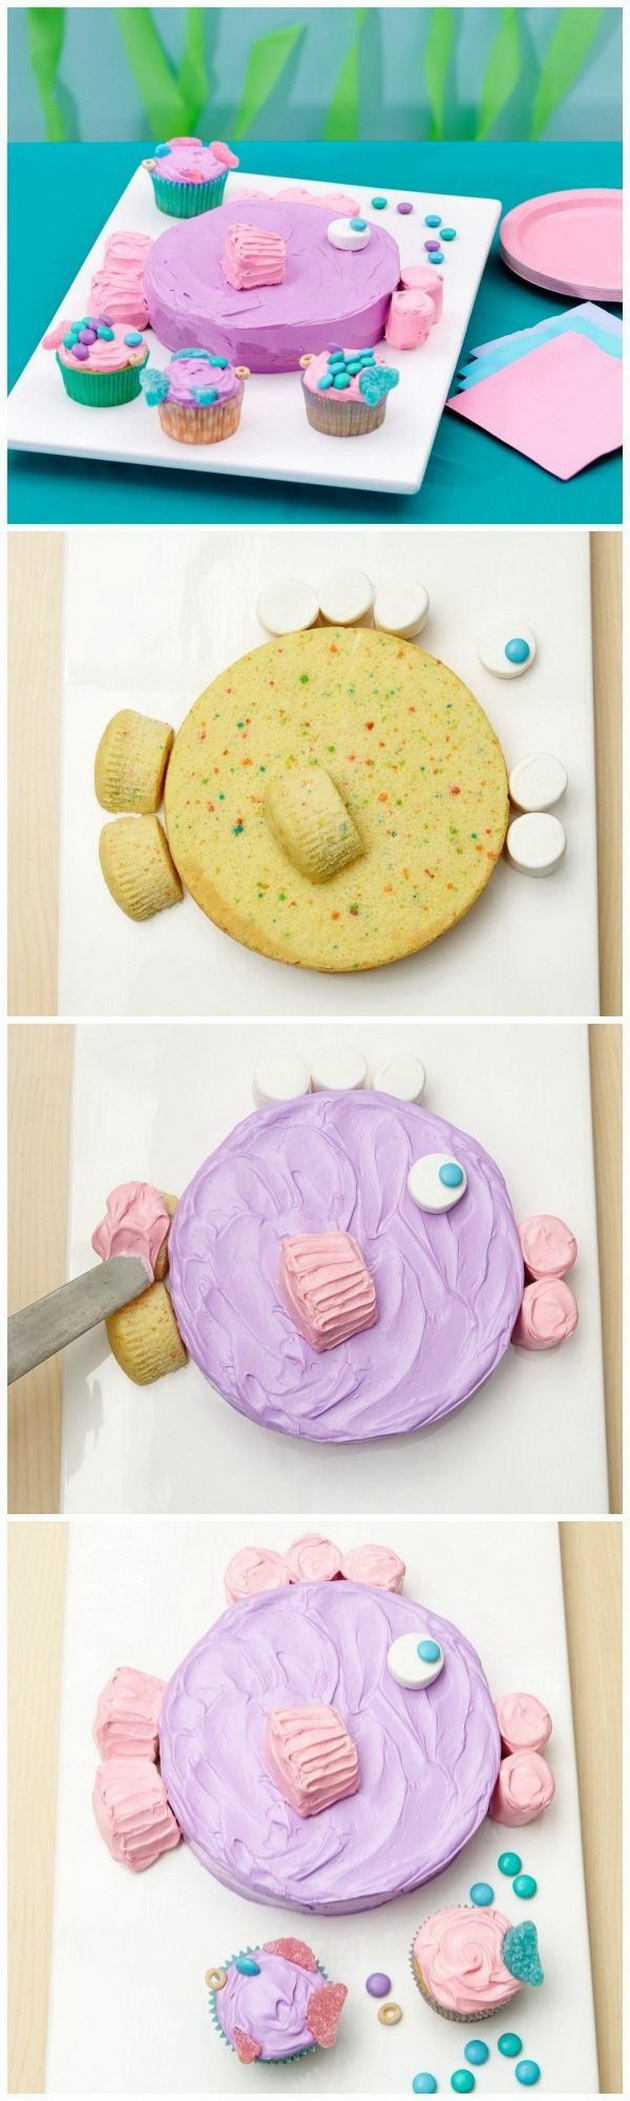 super-idei-detski-torti-koi-sekoja-majka-moze-da-gi-napravi-sama-foto-7.jpg